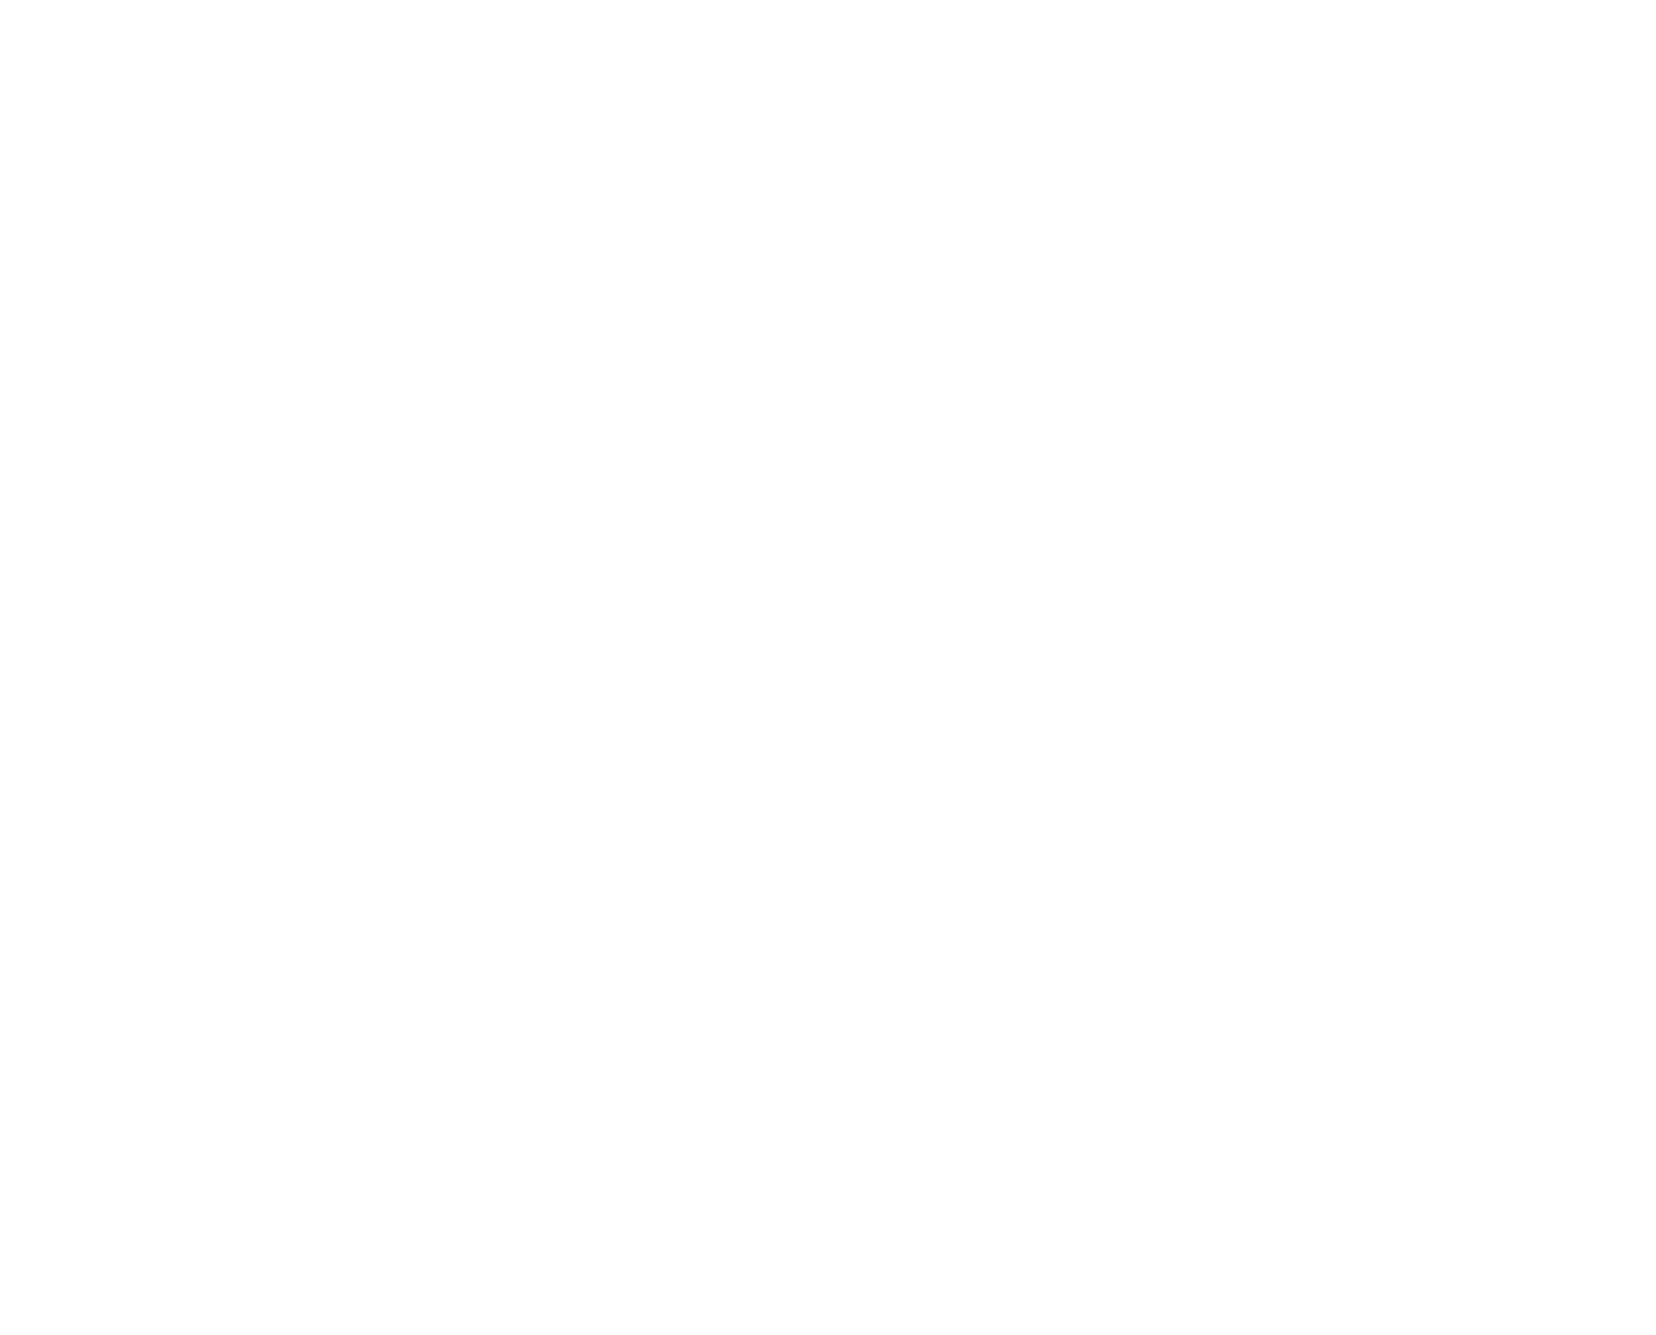 The Palm Springs Surf Club logo